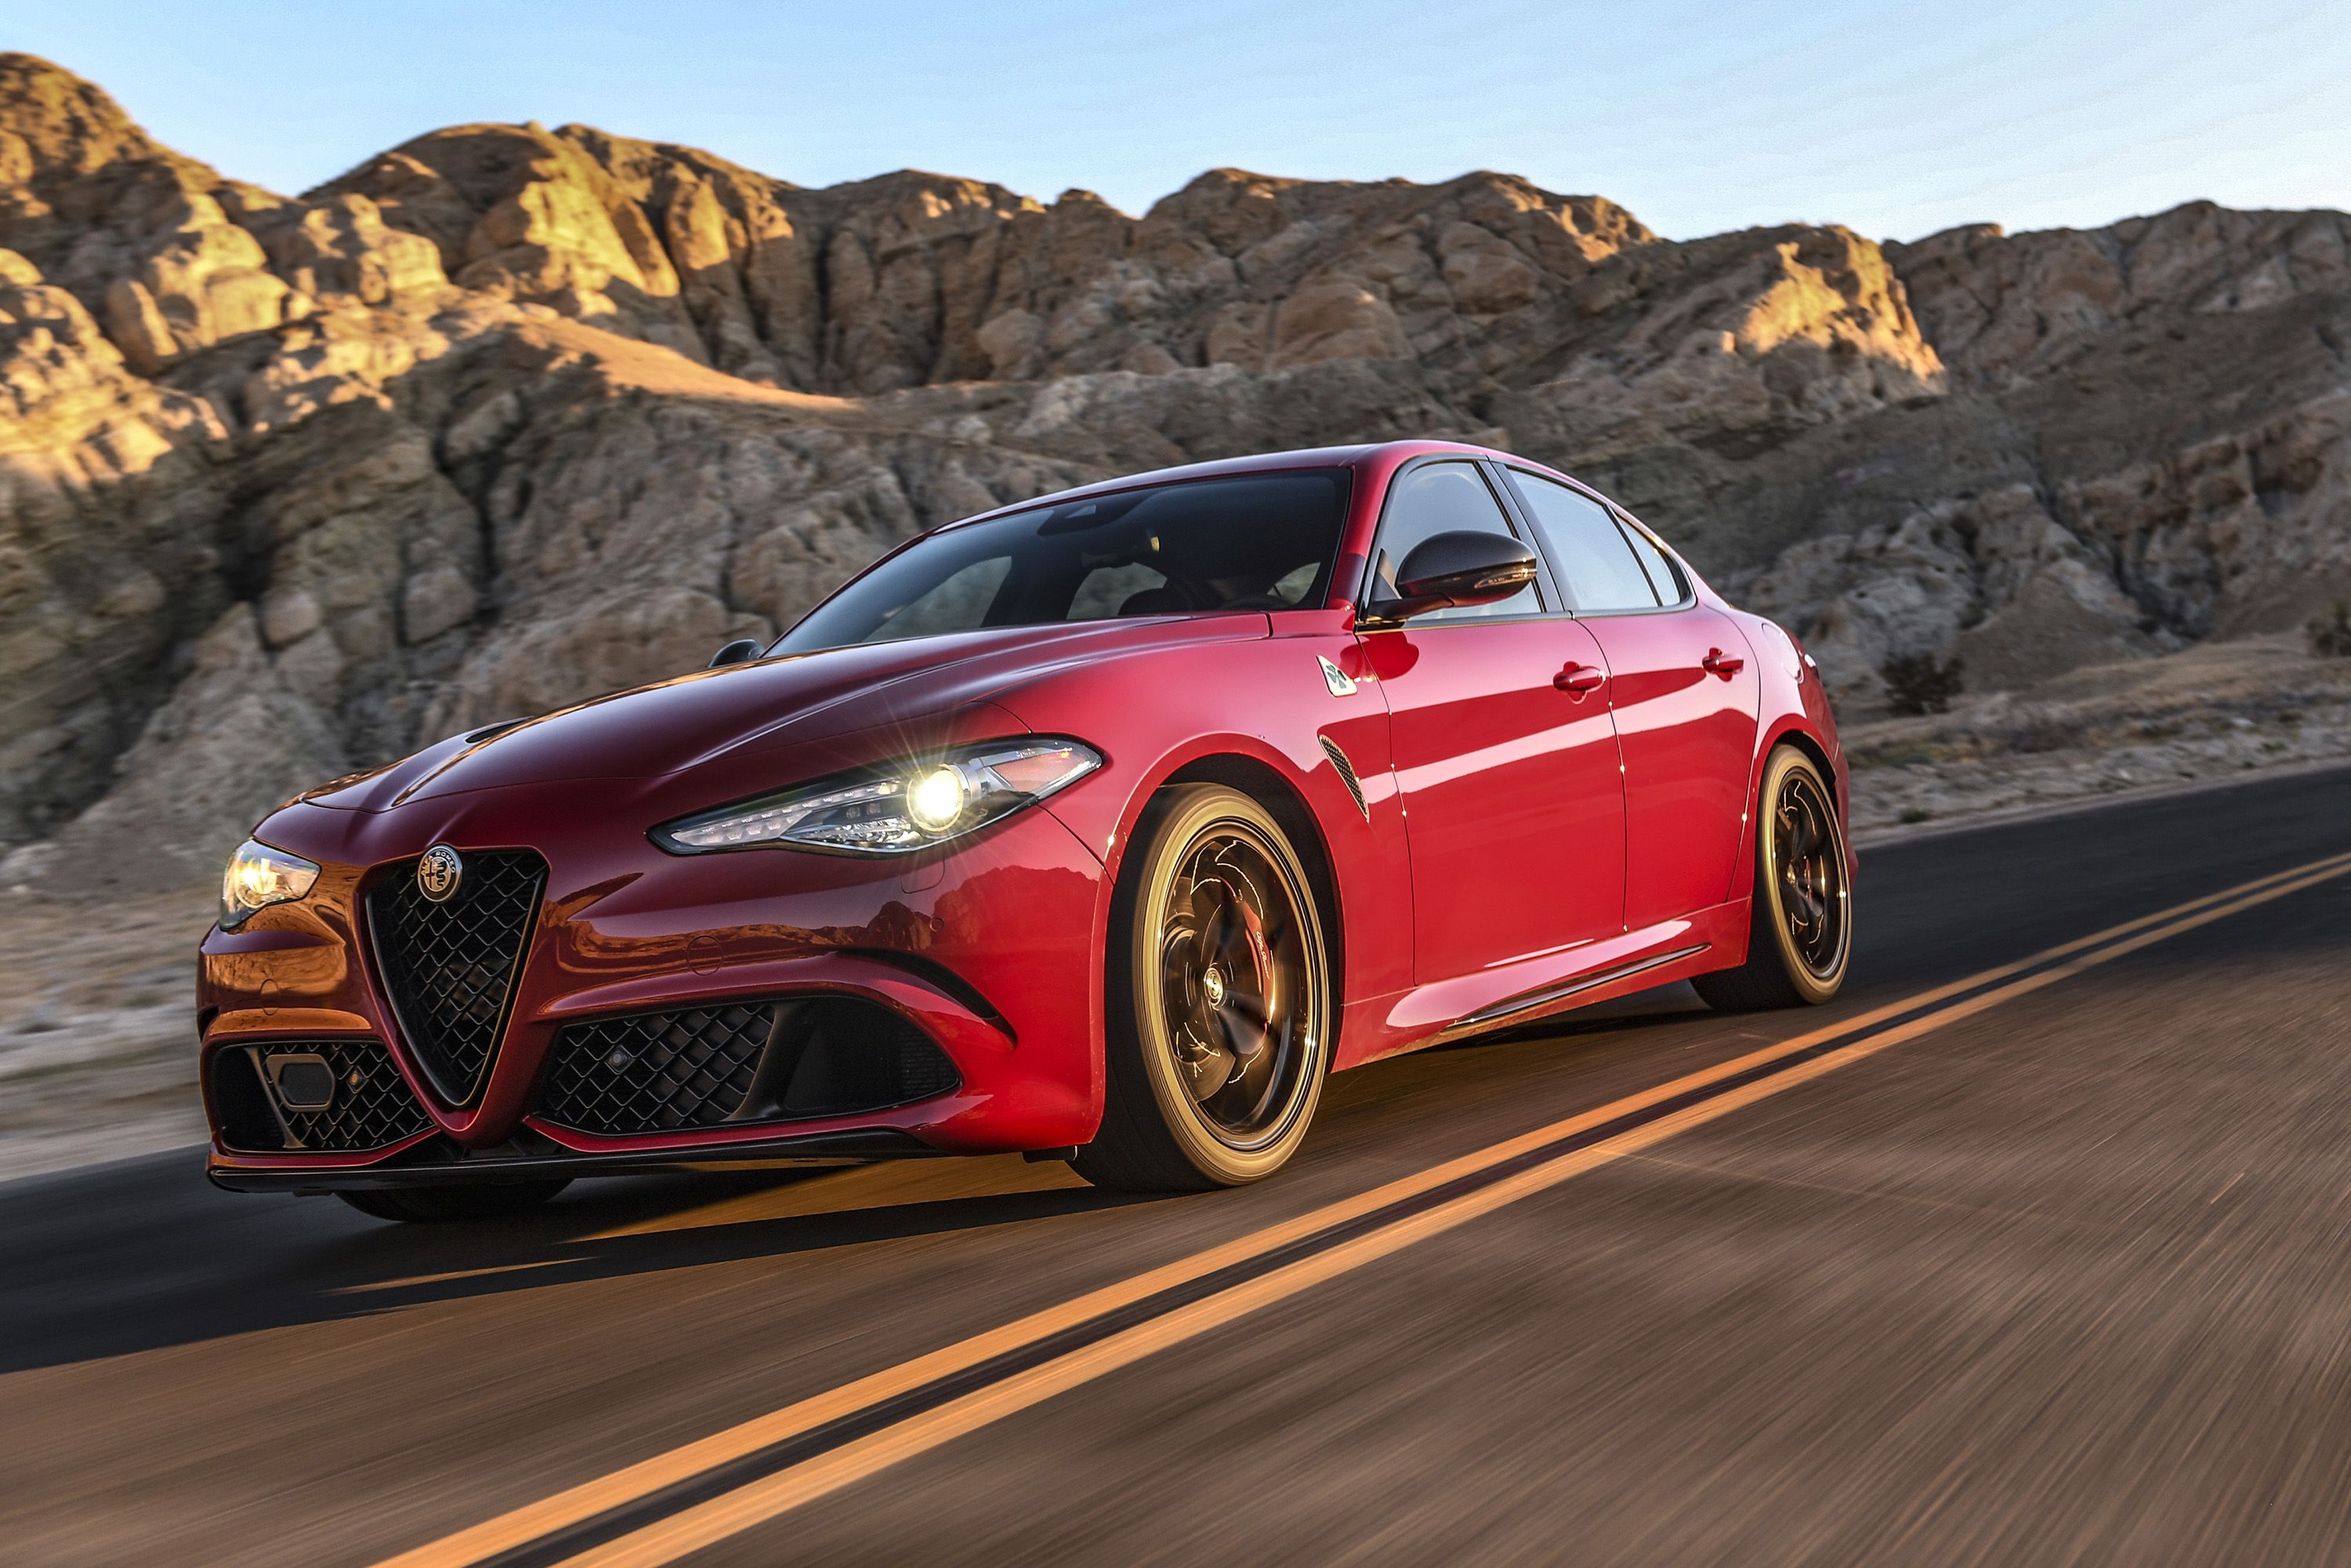 Is Alfa Romeo Popular in Europe?